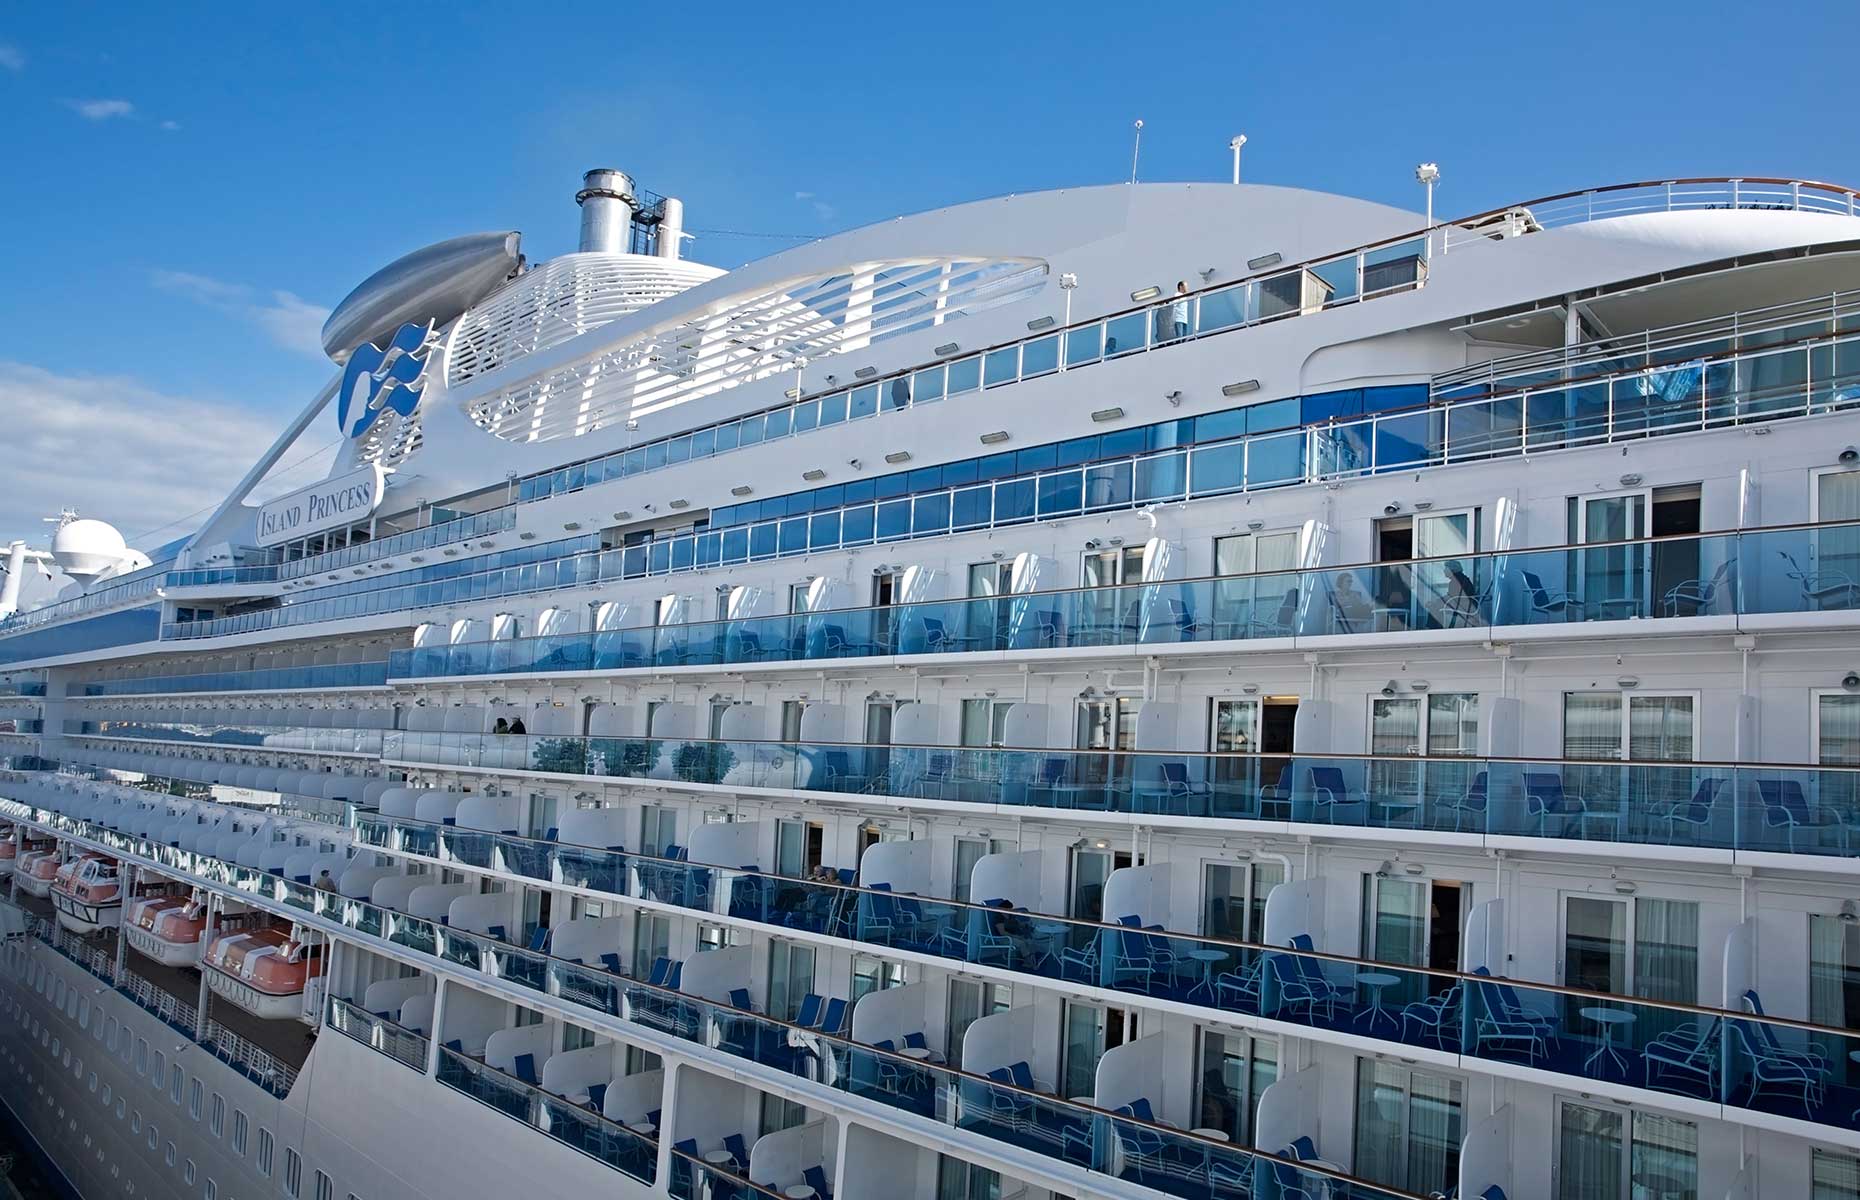 Island Cruises ship, a Princess Cruises vessels exterior with balconies (Image: Tryphosa Ho/Alamy Stock Photo)